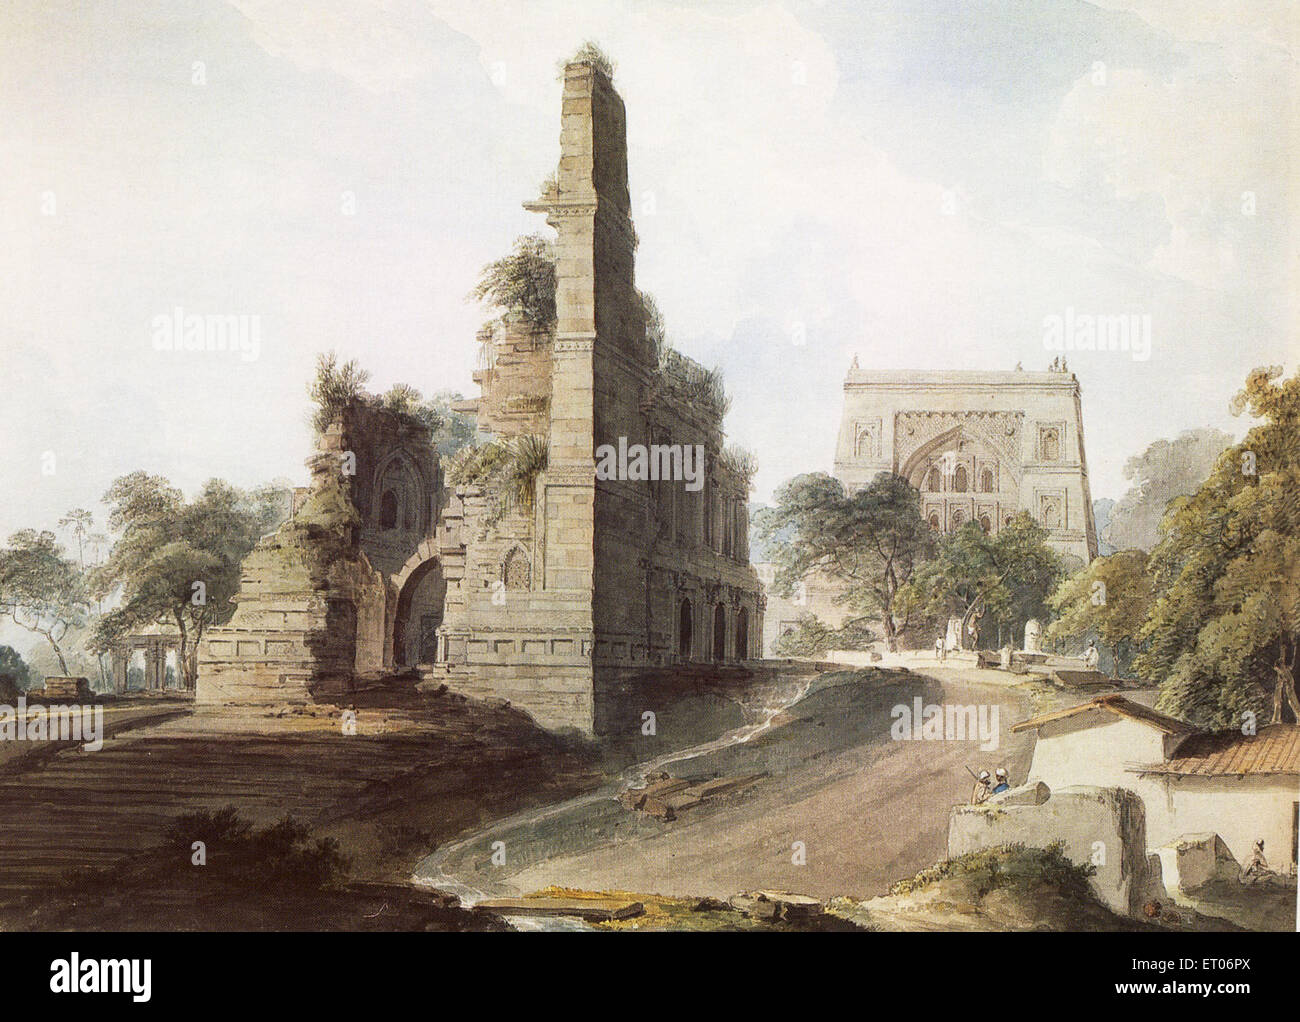 JAMA Masjid, mosquée Jama, Jami Masjid, Badi Masjid, Jaunpur, Uttar Pradesh, Inde, peinture d'aquarelle vintage 1700s de Thomas Daniell, 1749- 1840 Banque D'Images